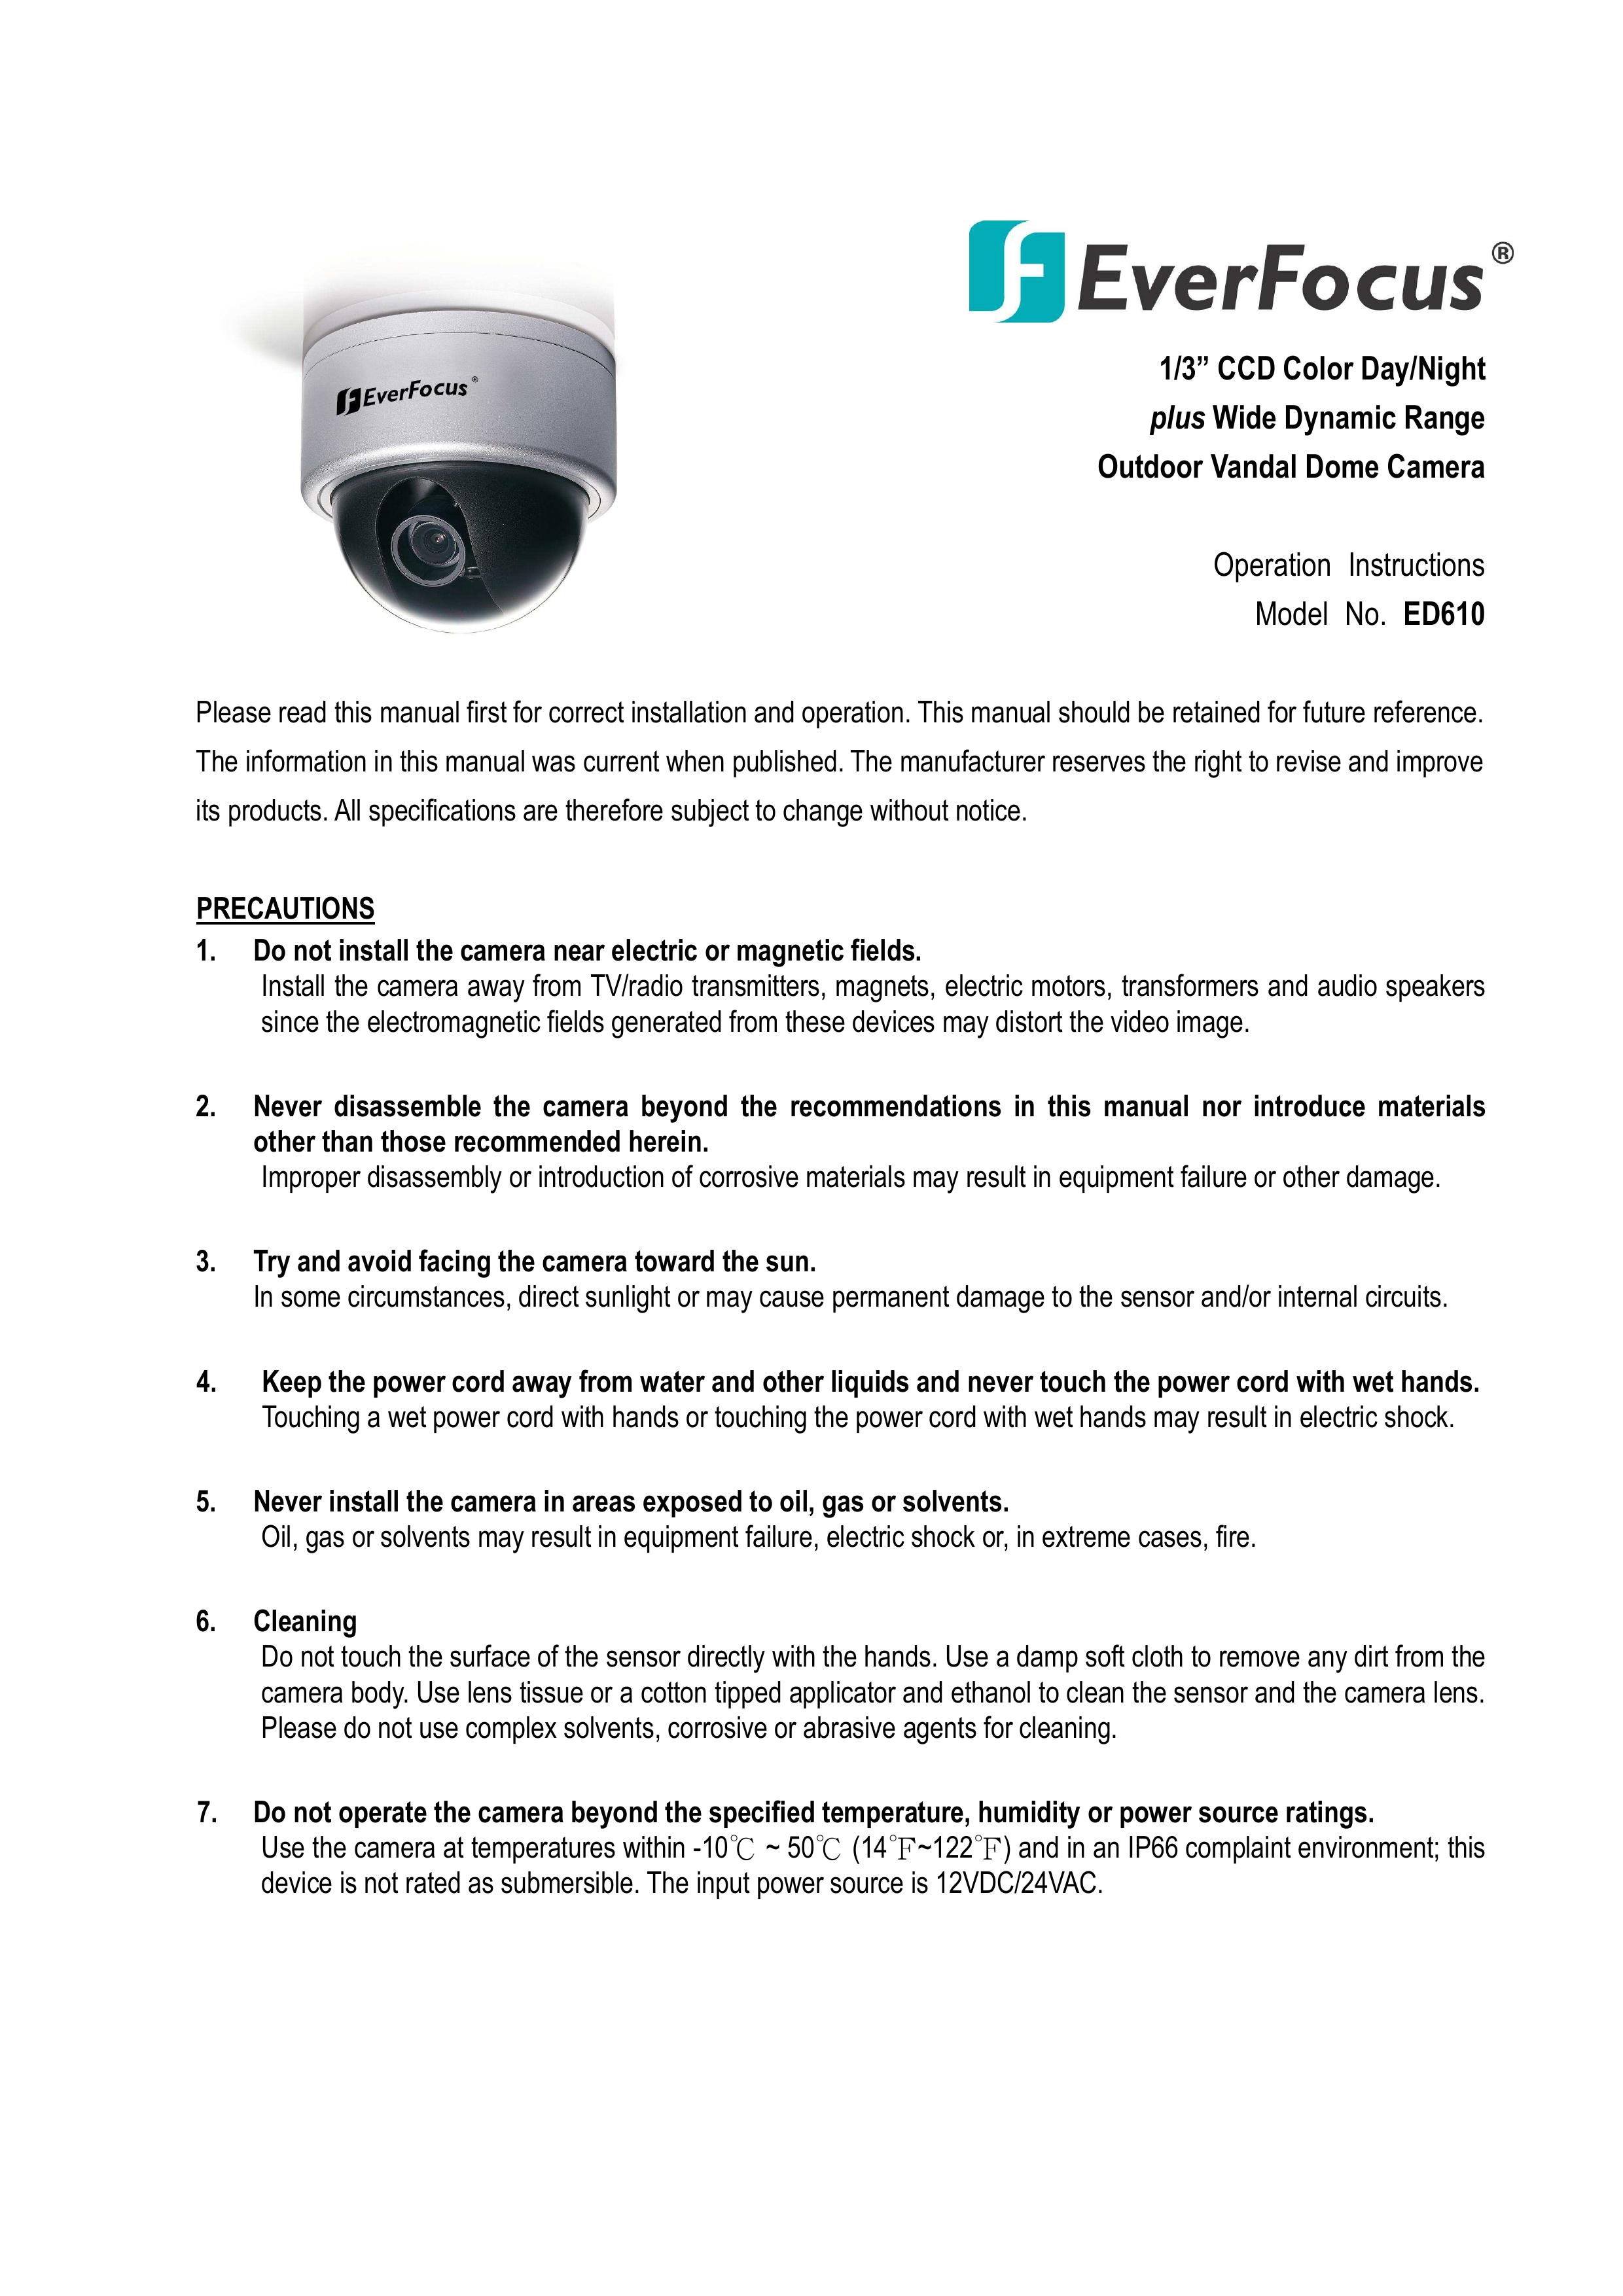 EverFocus ED610 Security Camera User Manual